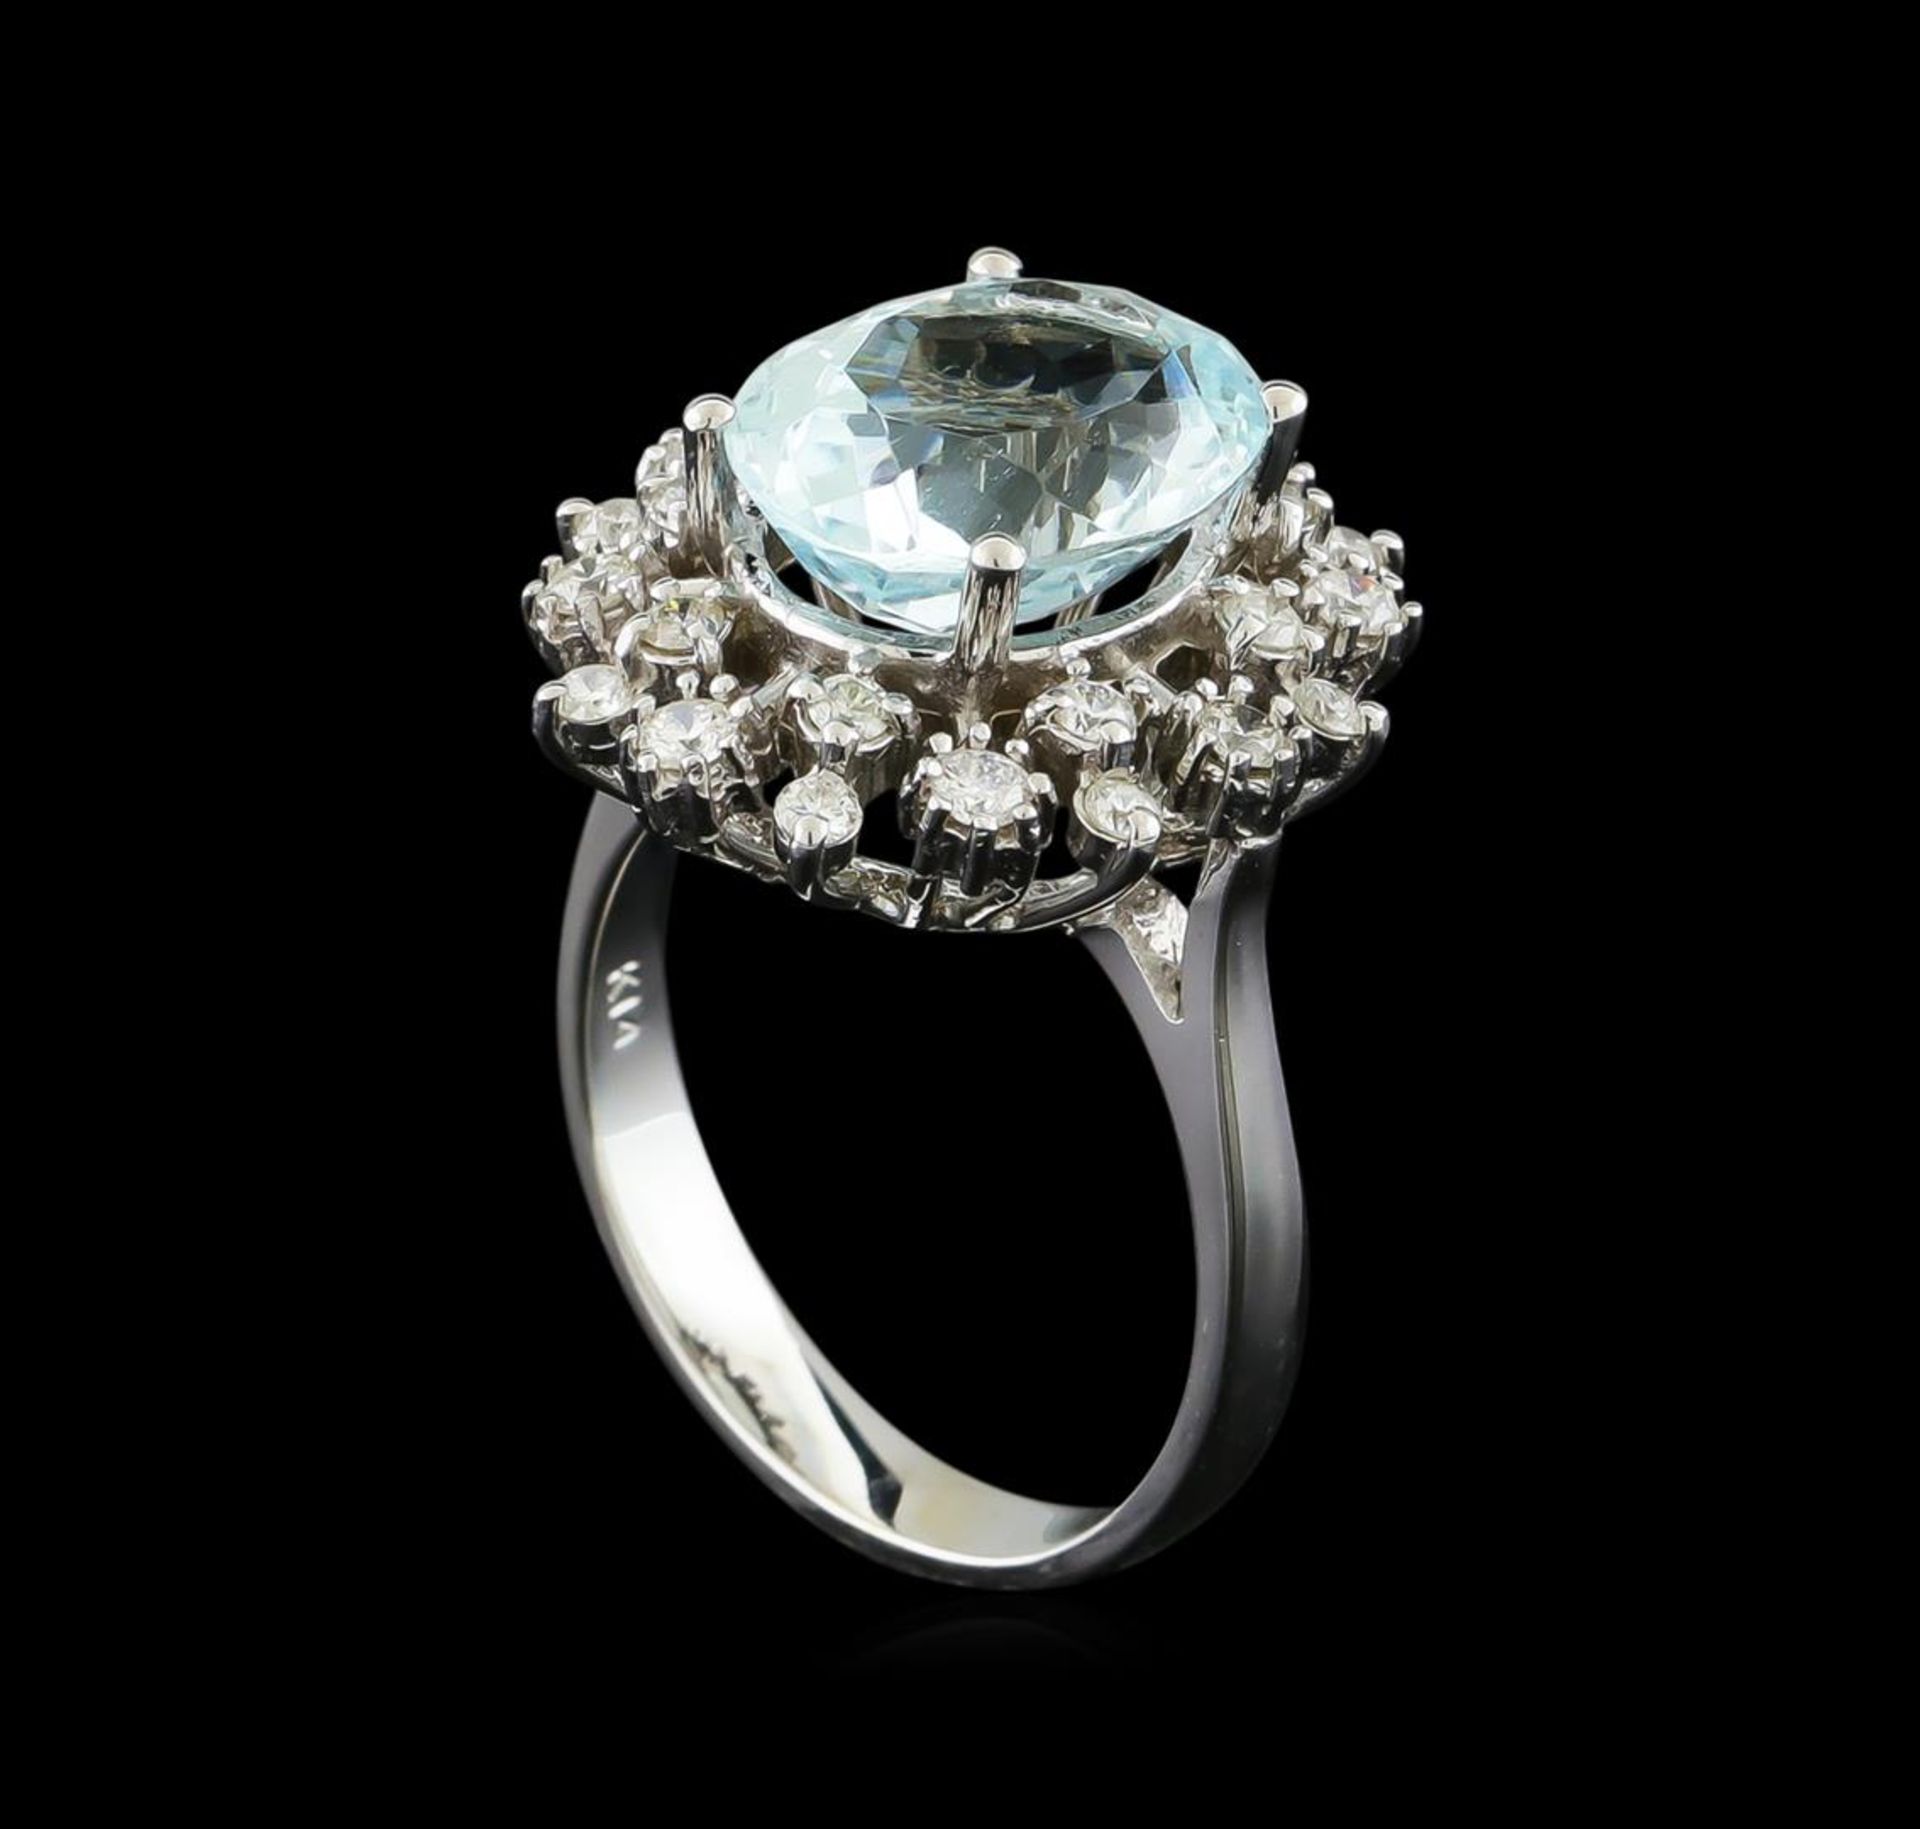 4.3 ctw Aquamarine and Diamond Ring - 14KT White Gold - Image 4 of 4